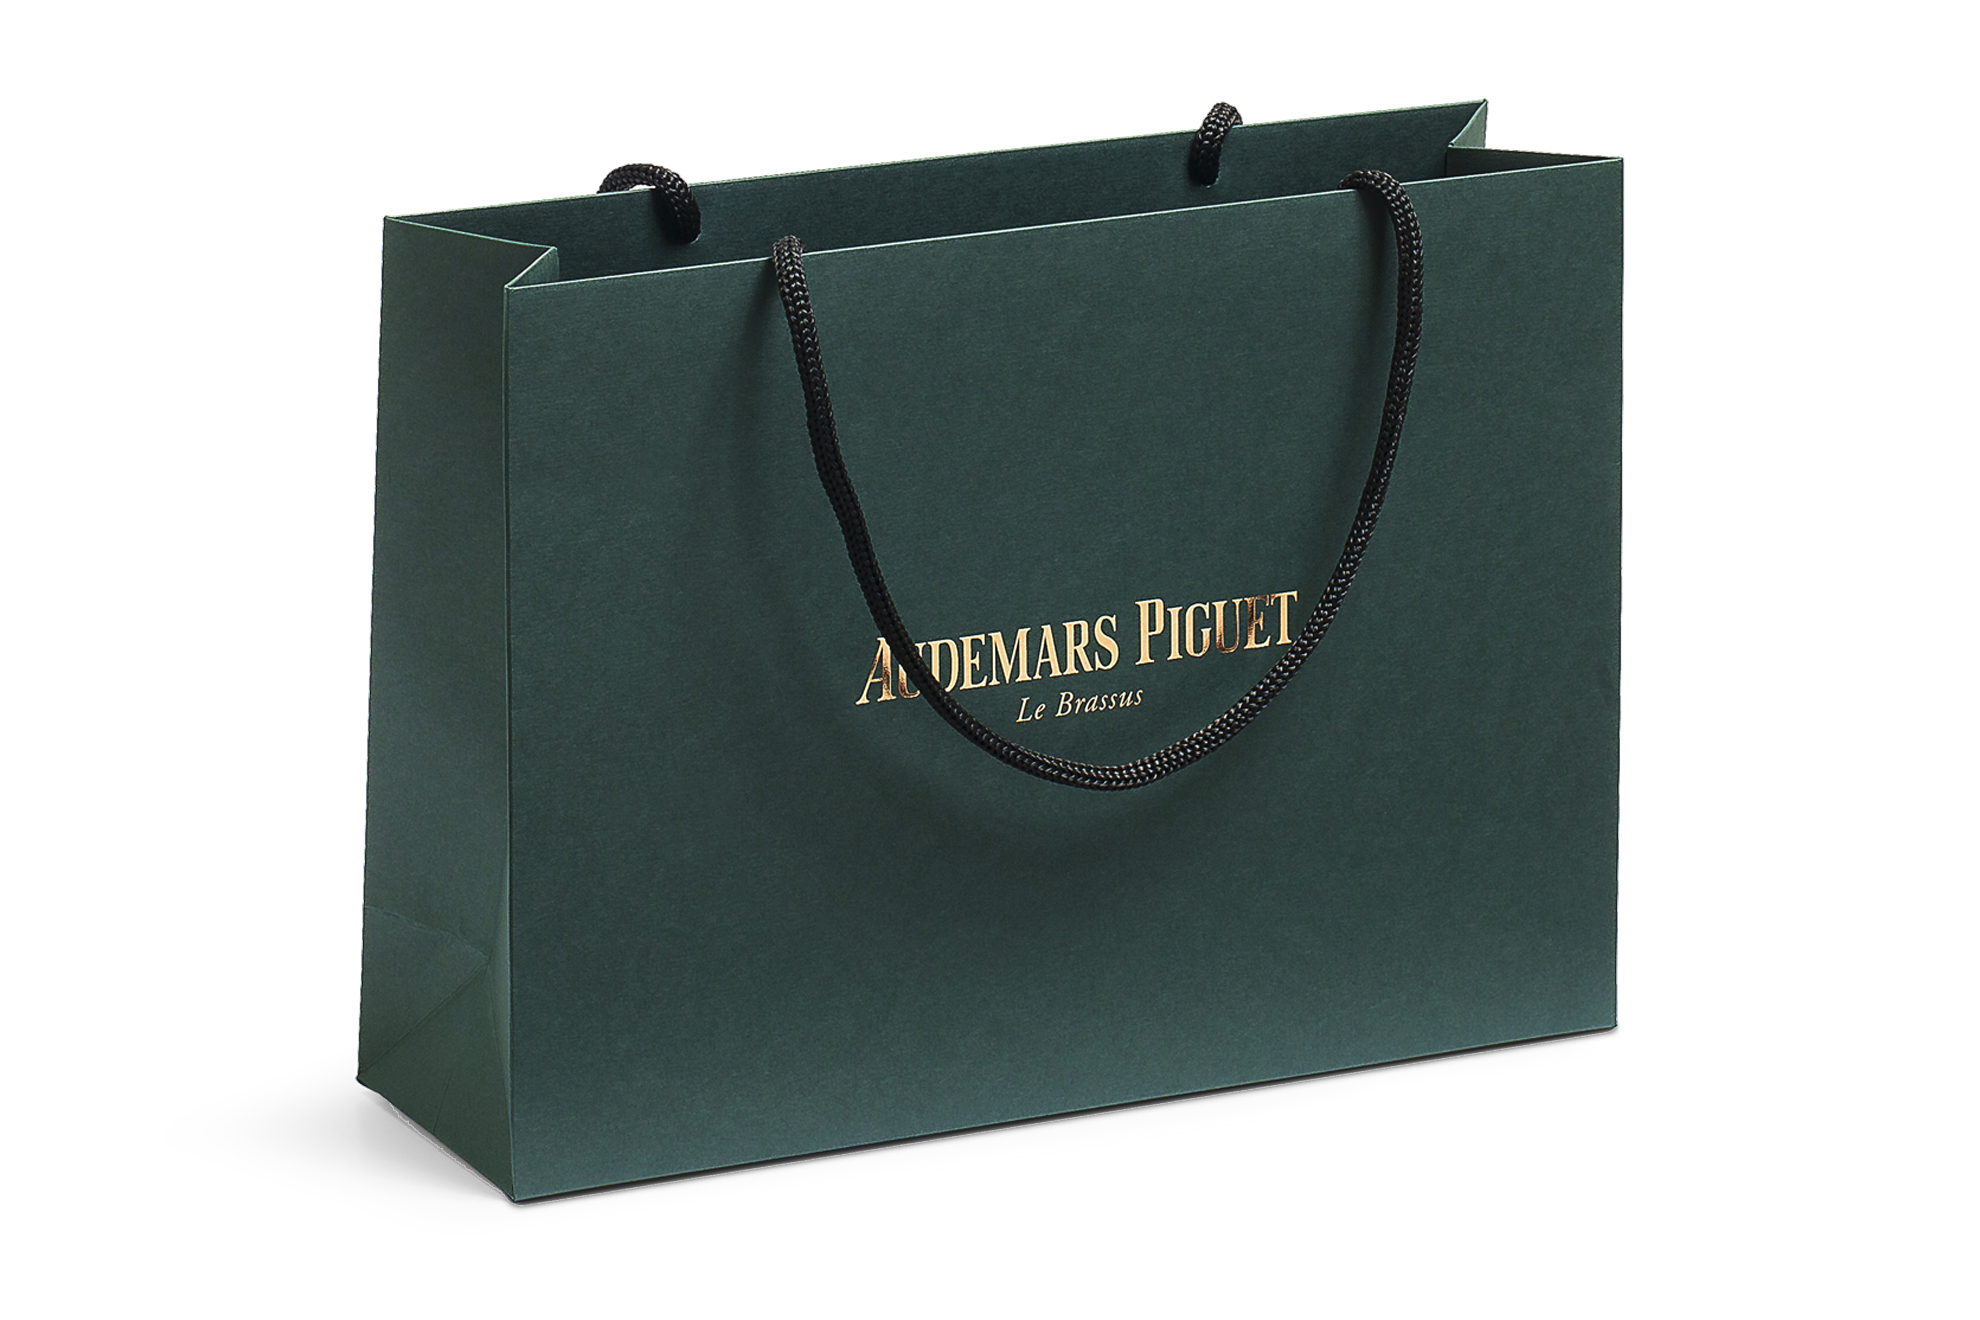 audemars piguet bag with glued handles